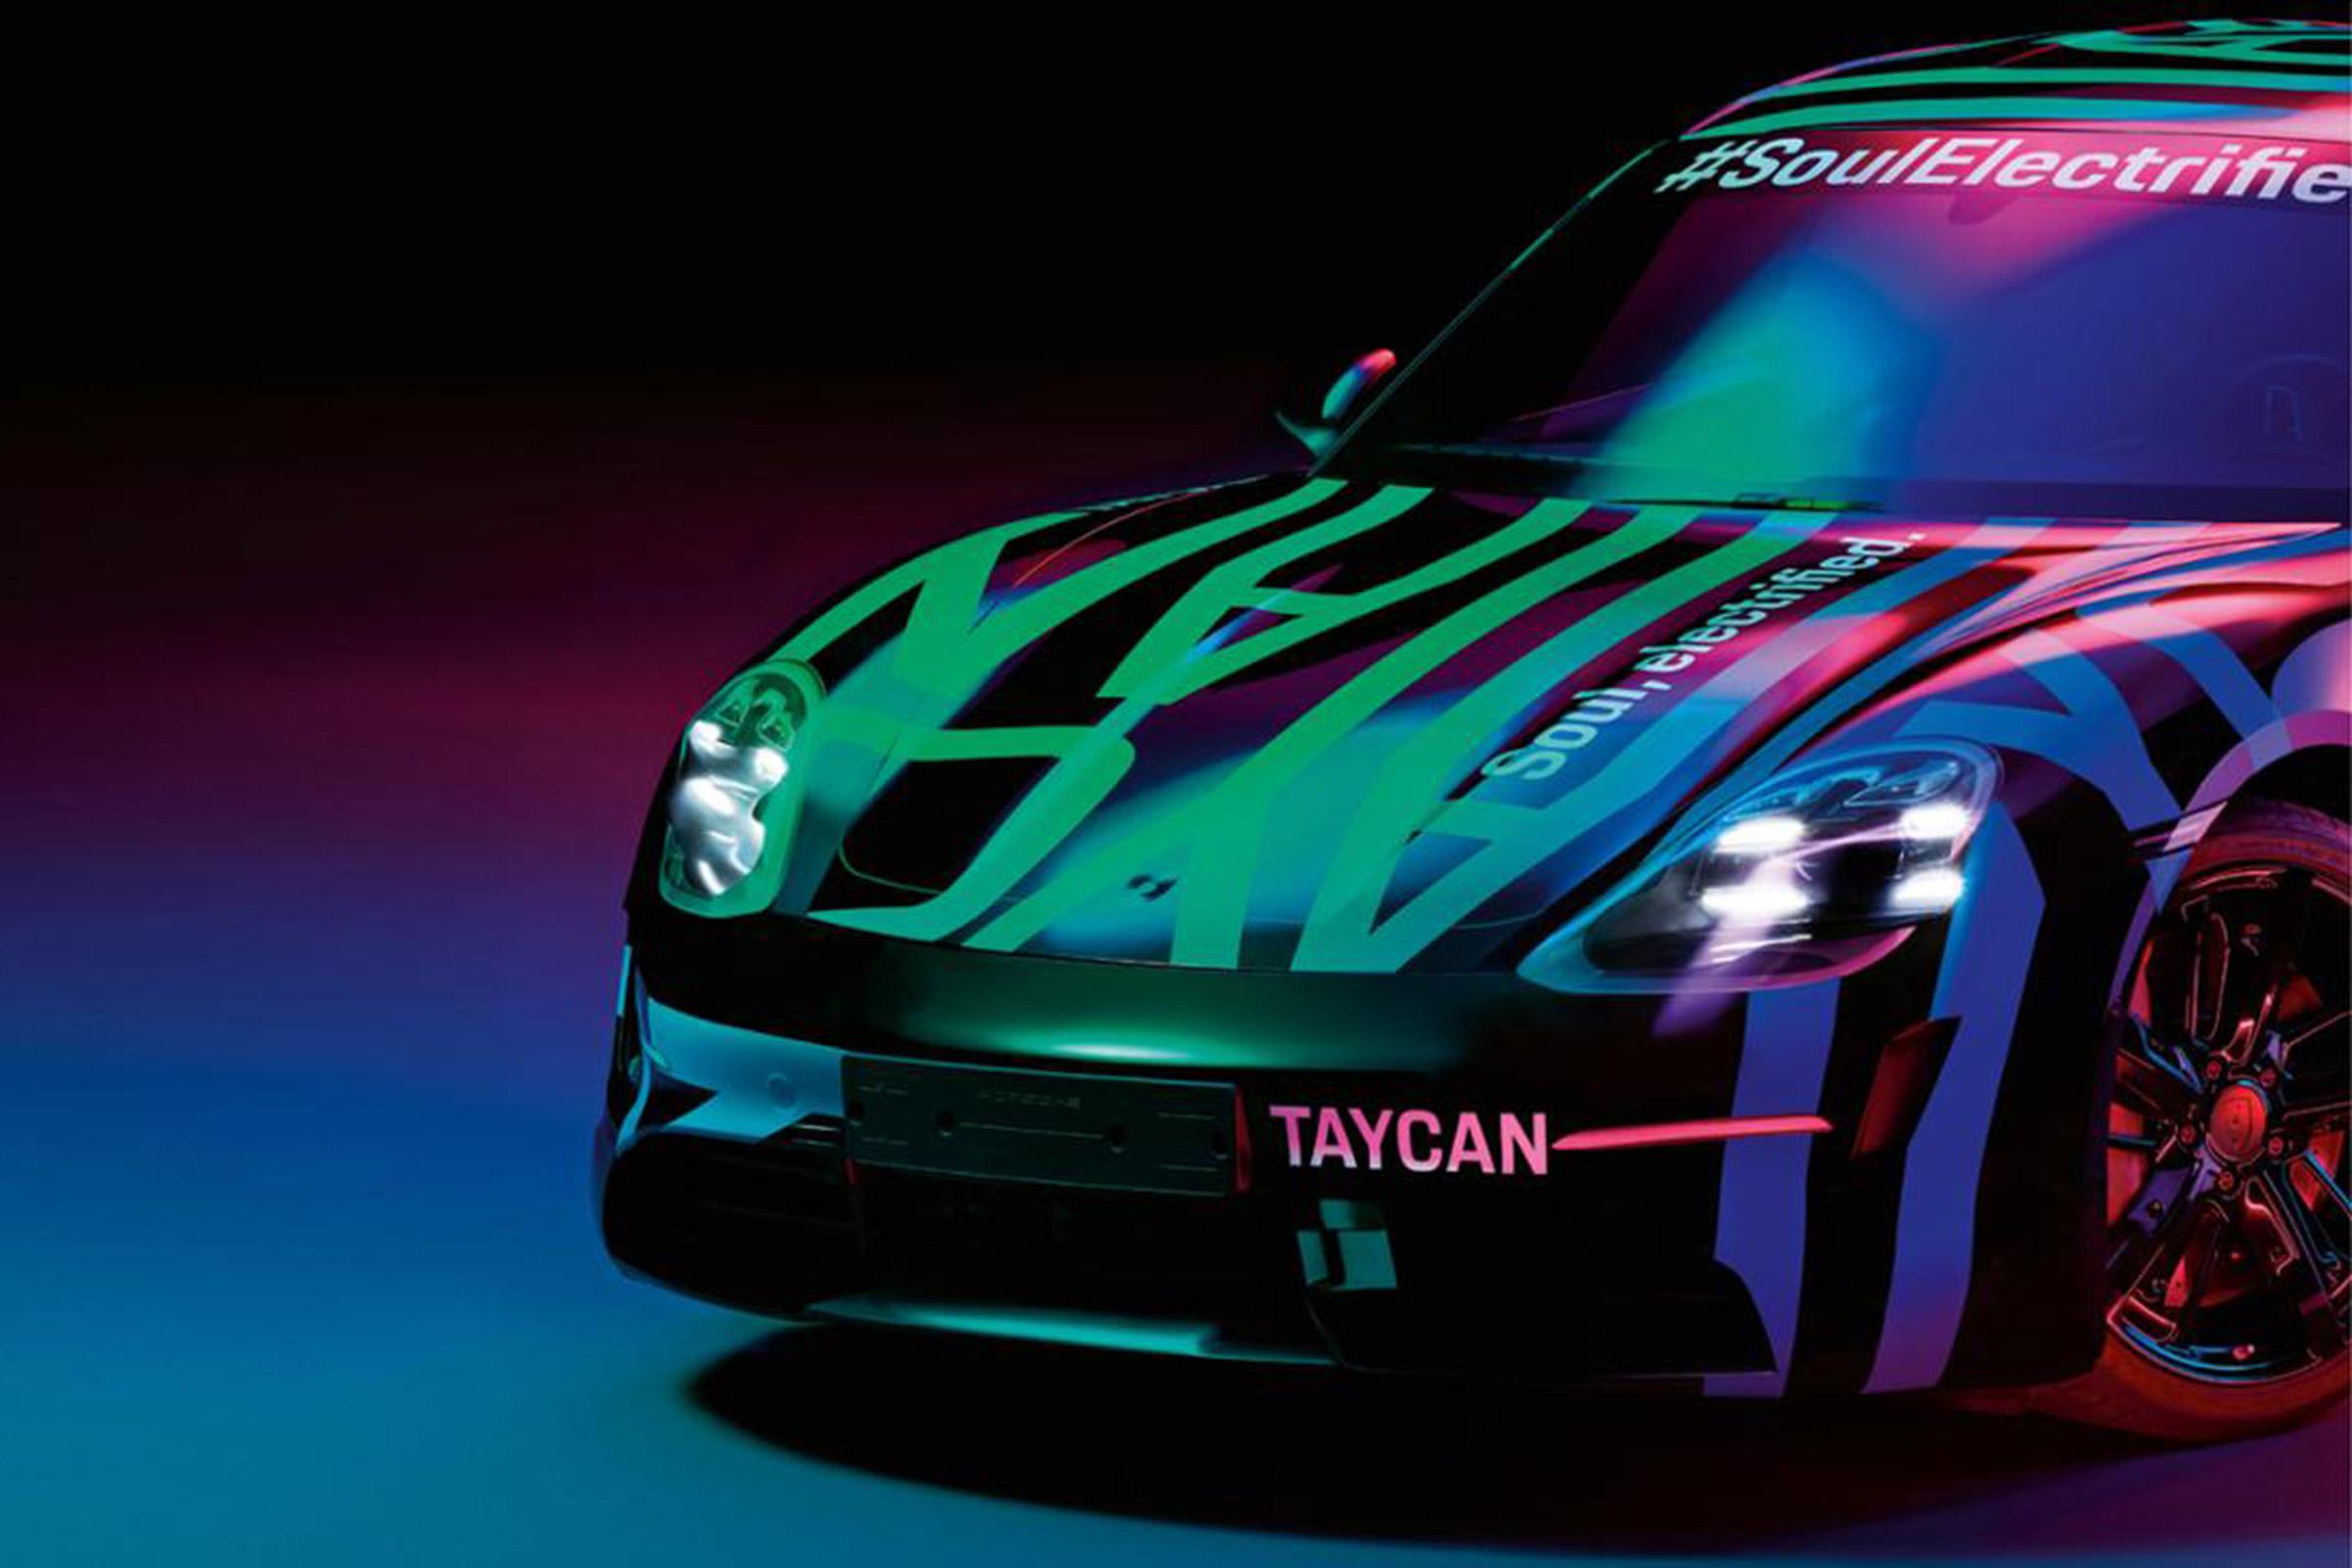 New 2019 Porsche Taycan: Fresh Teaser Image Of All Electric Tesla